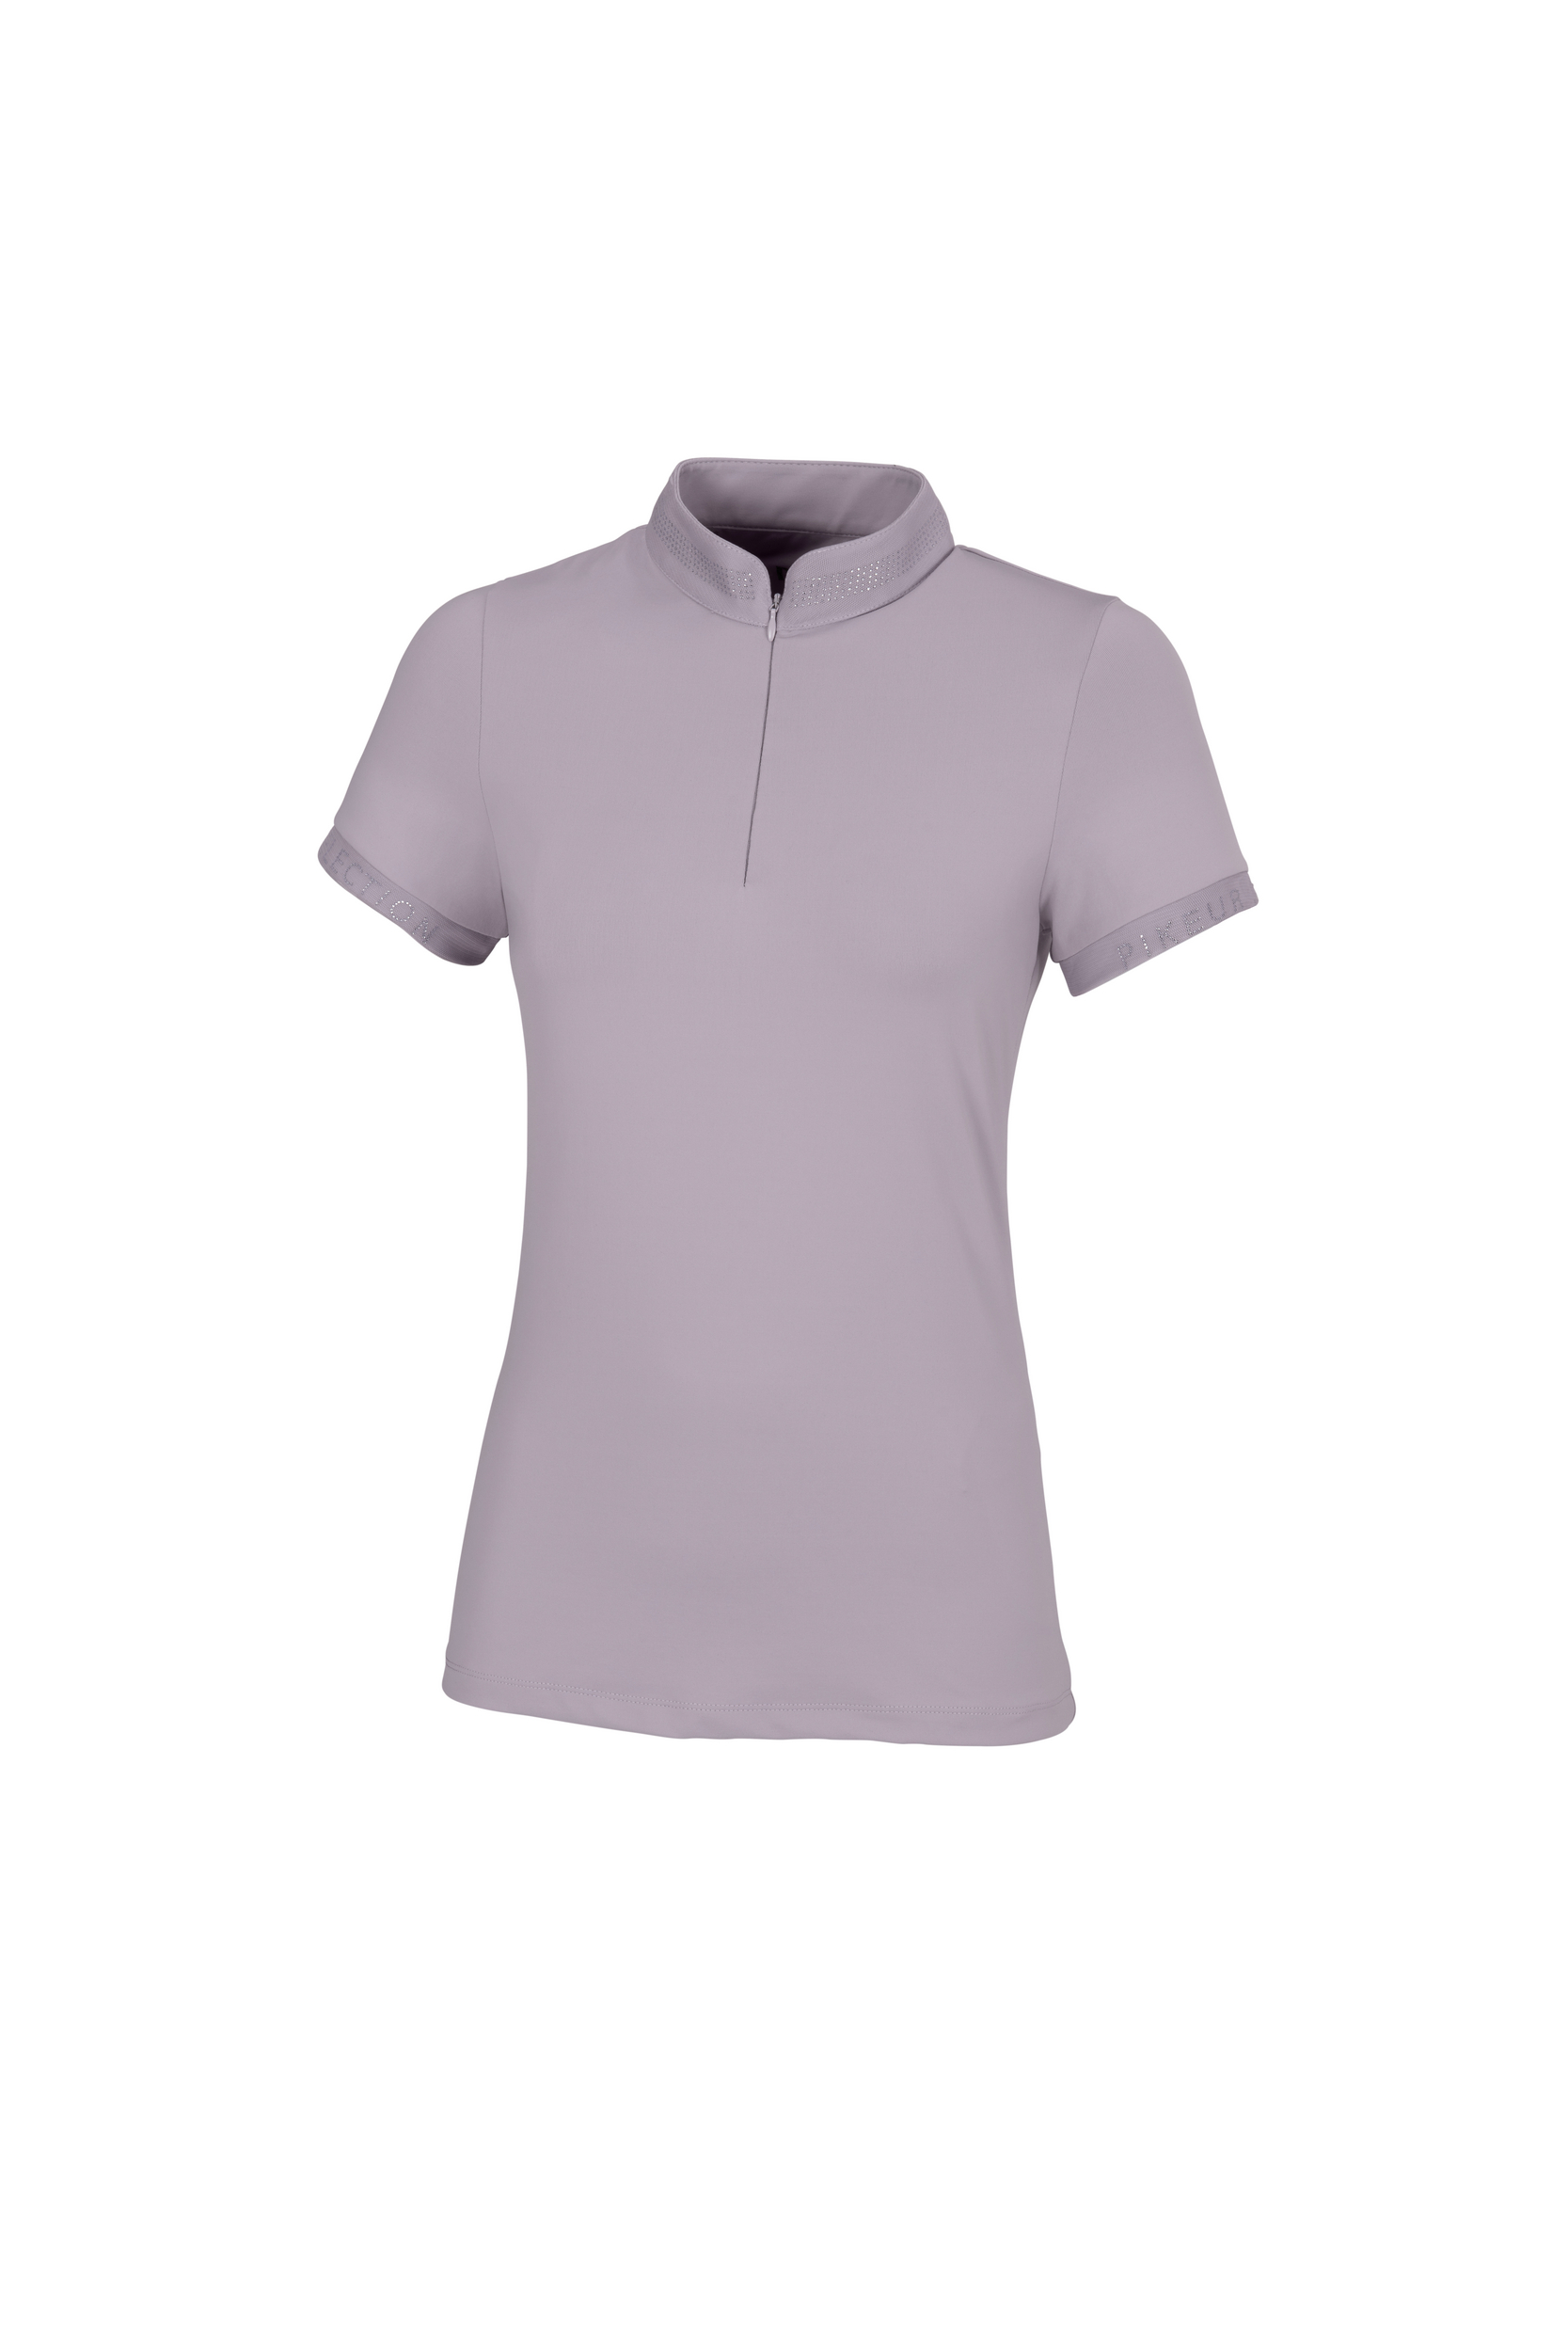 PERNILLE Shirt, Damen, Selection 22, silk purple